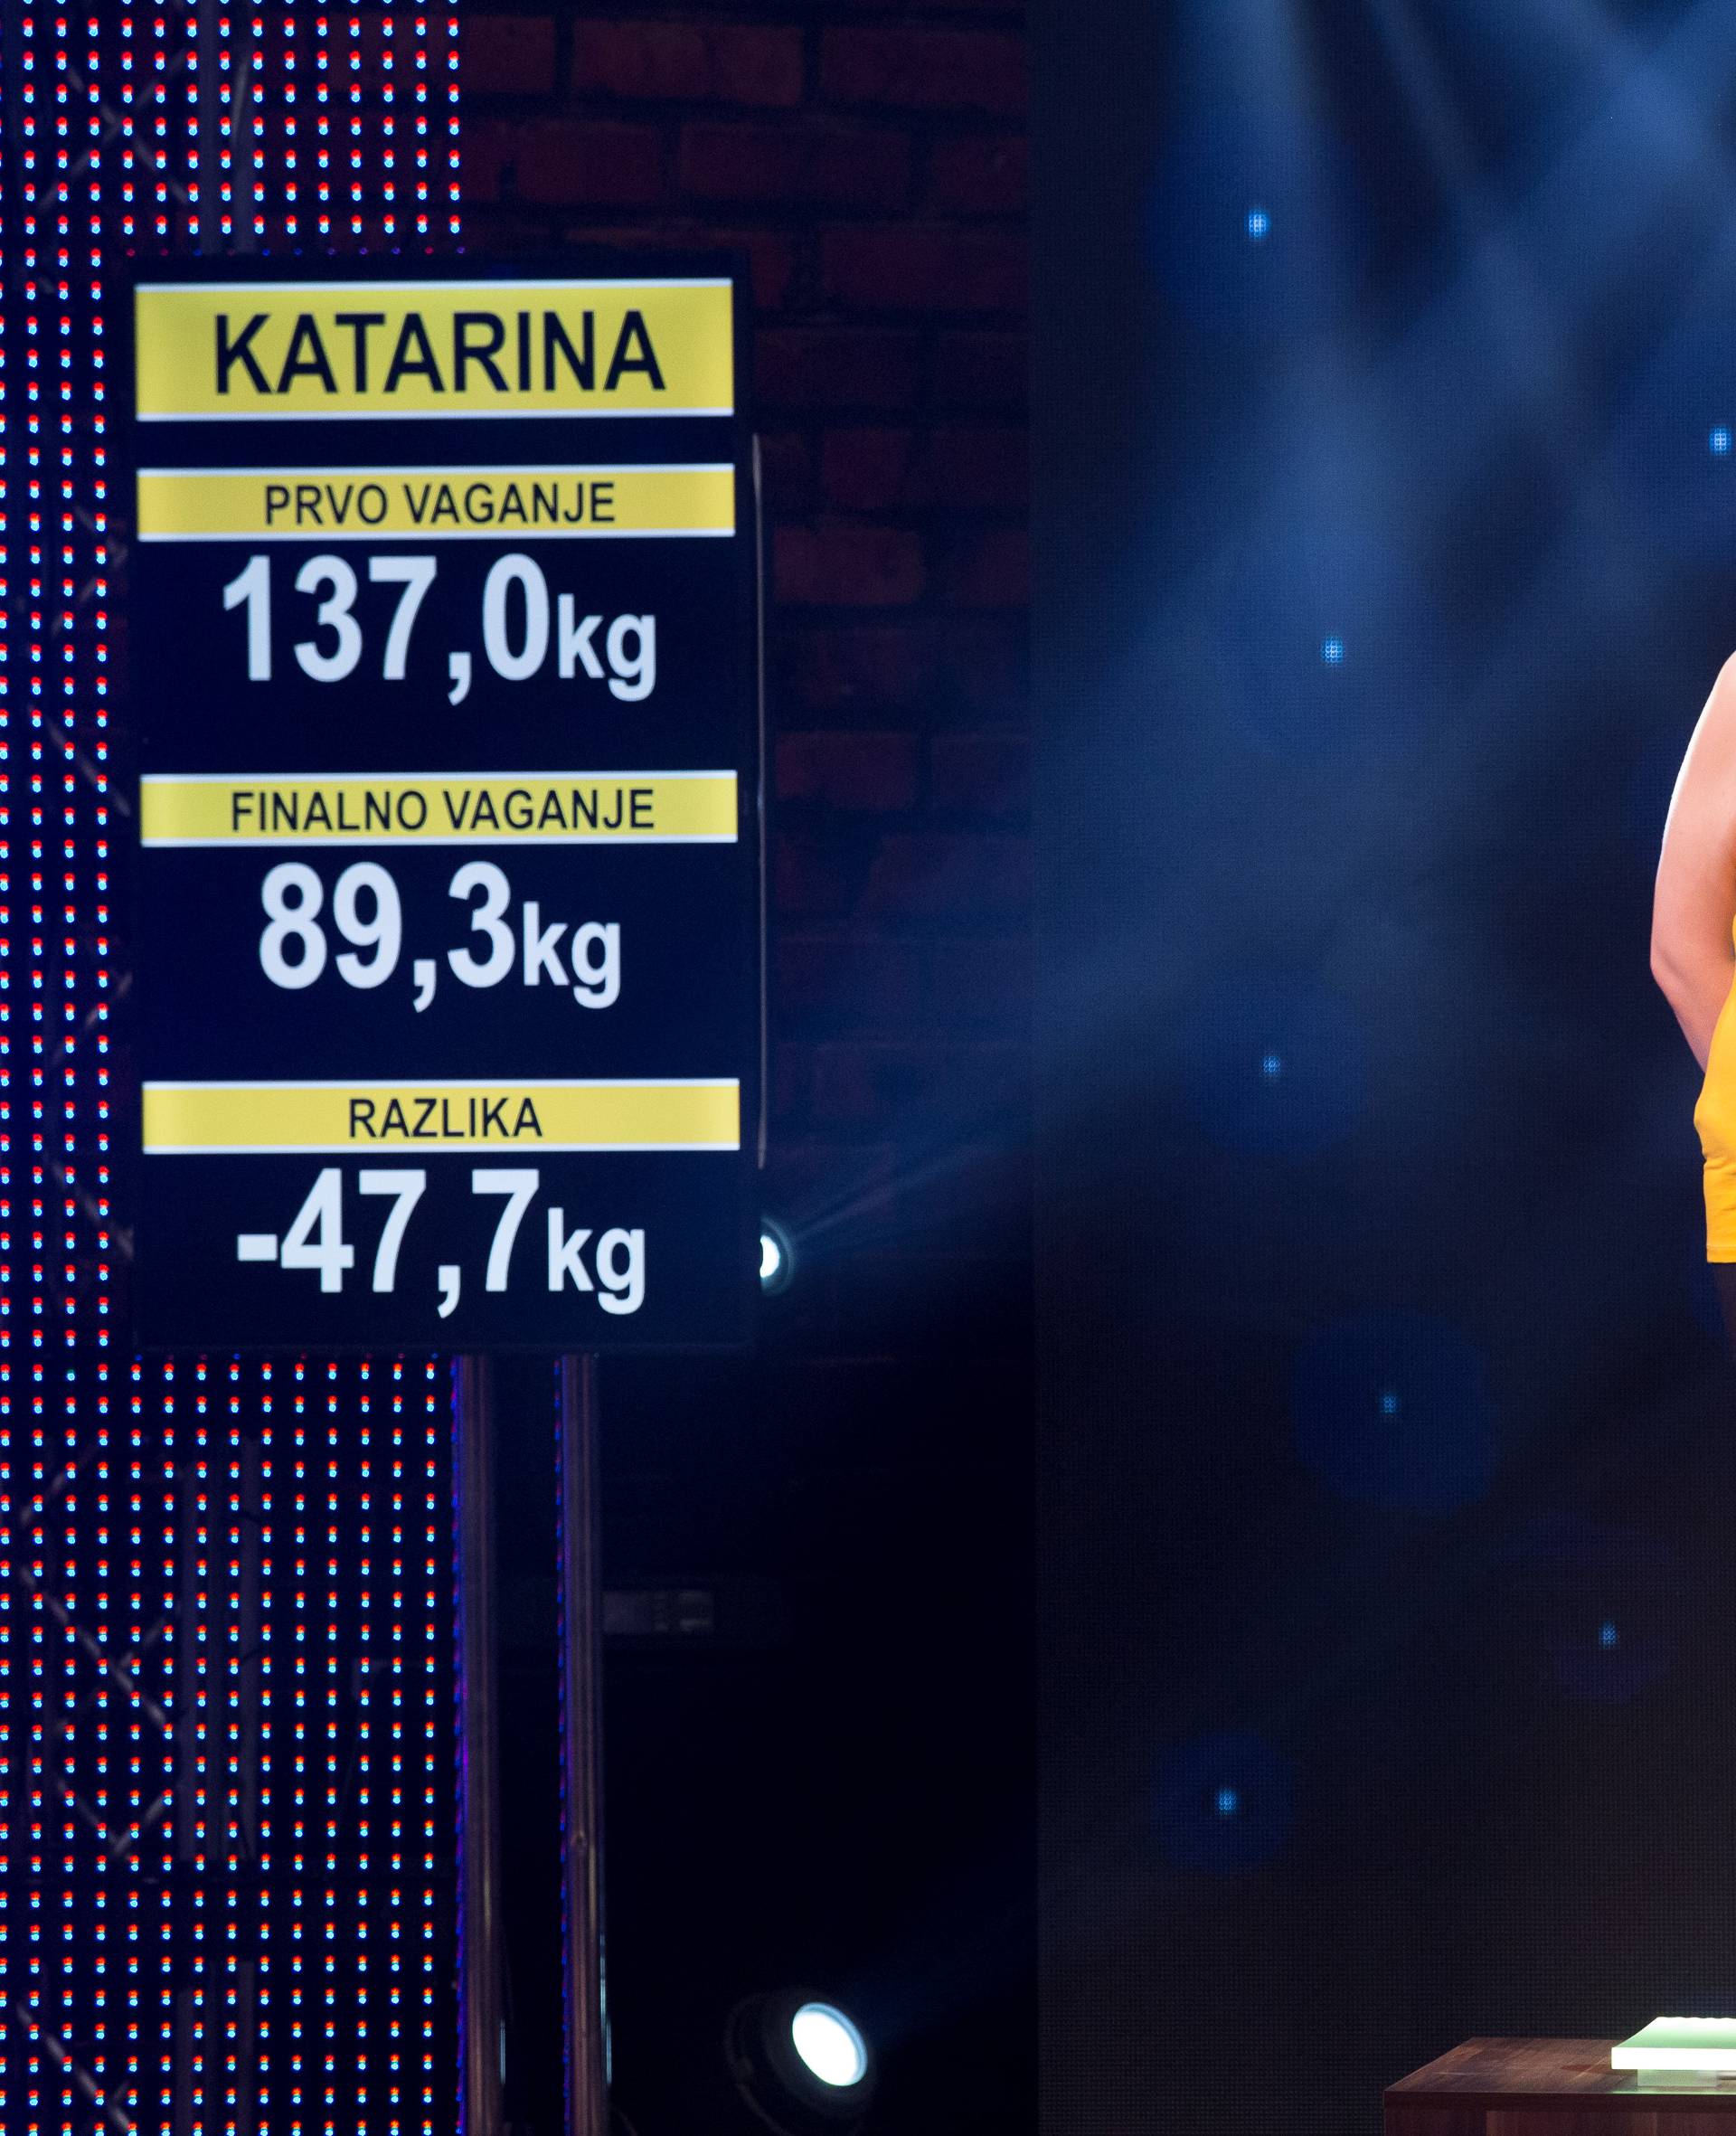 Katarina izgubila preko 45 kg: Od ‘buce’ postala fitness guru